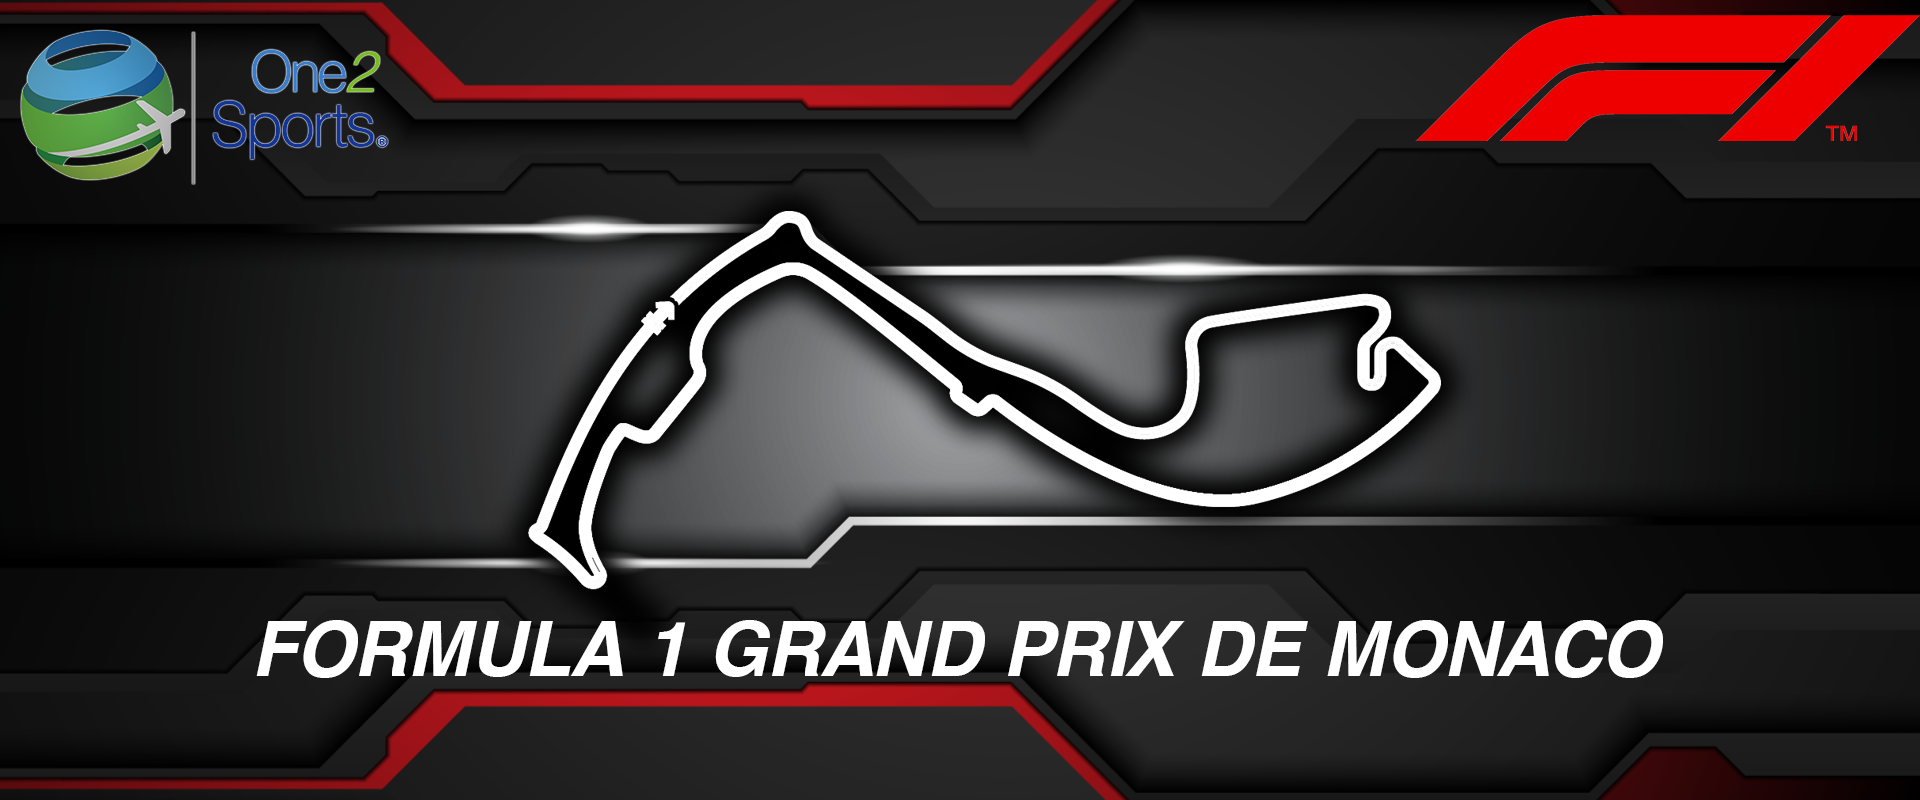 F1 Gran Prix de Mónaco